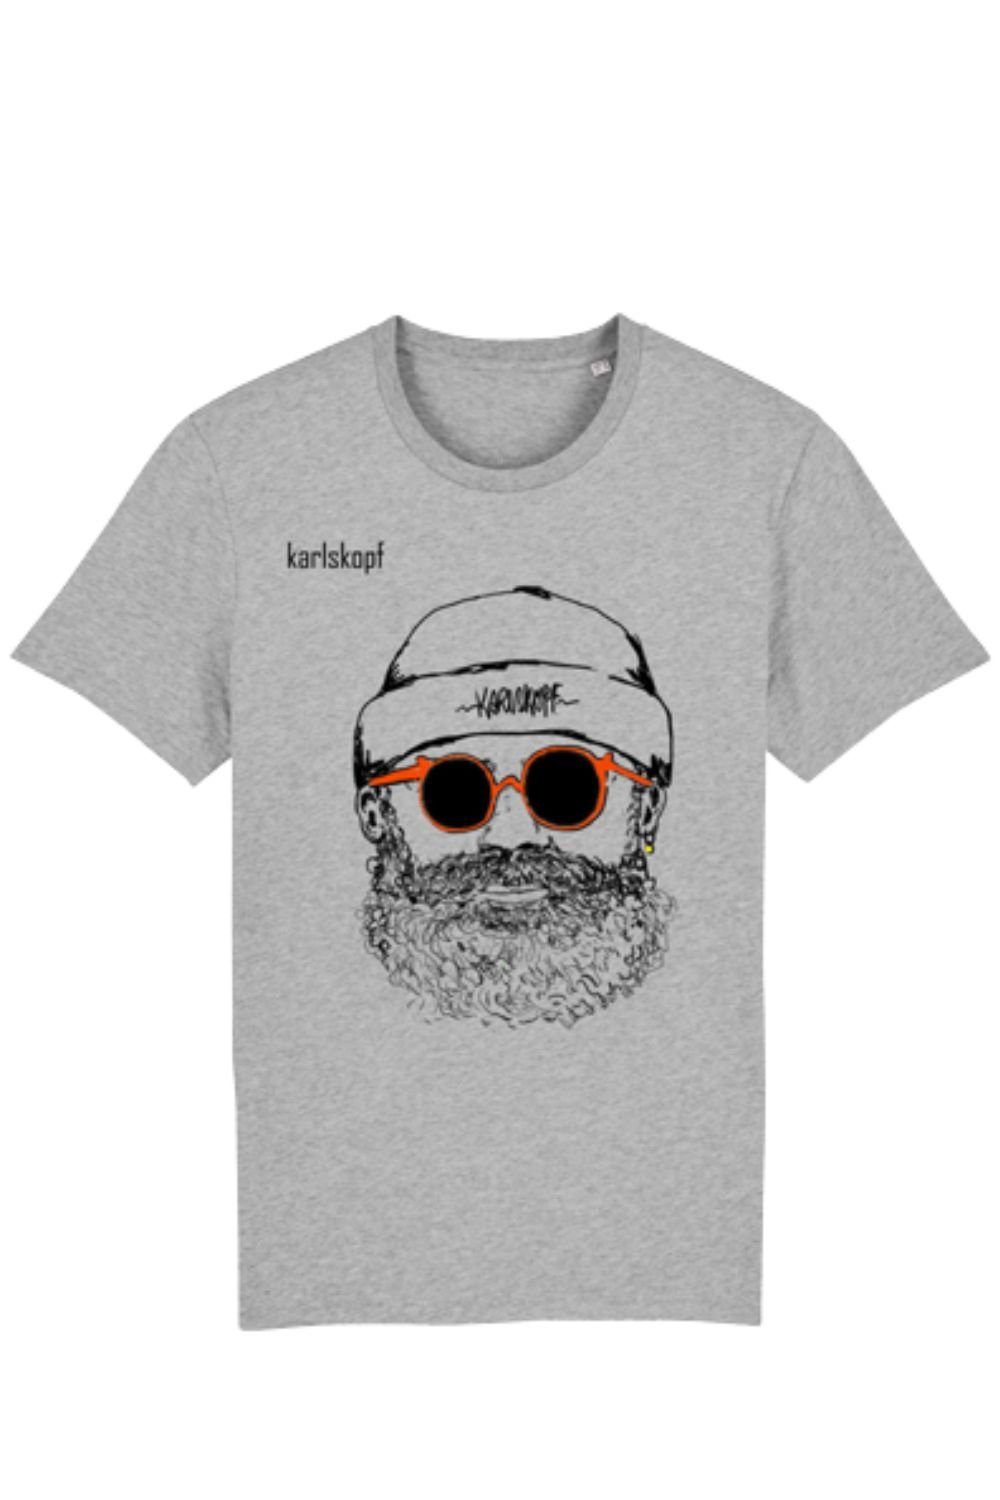 Print-Shirt Basic Grau karlskopf Rundhalsshirt HIPSTER